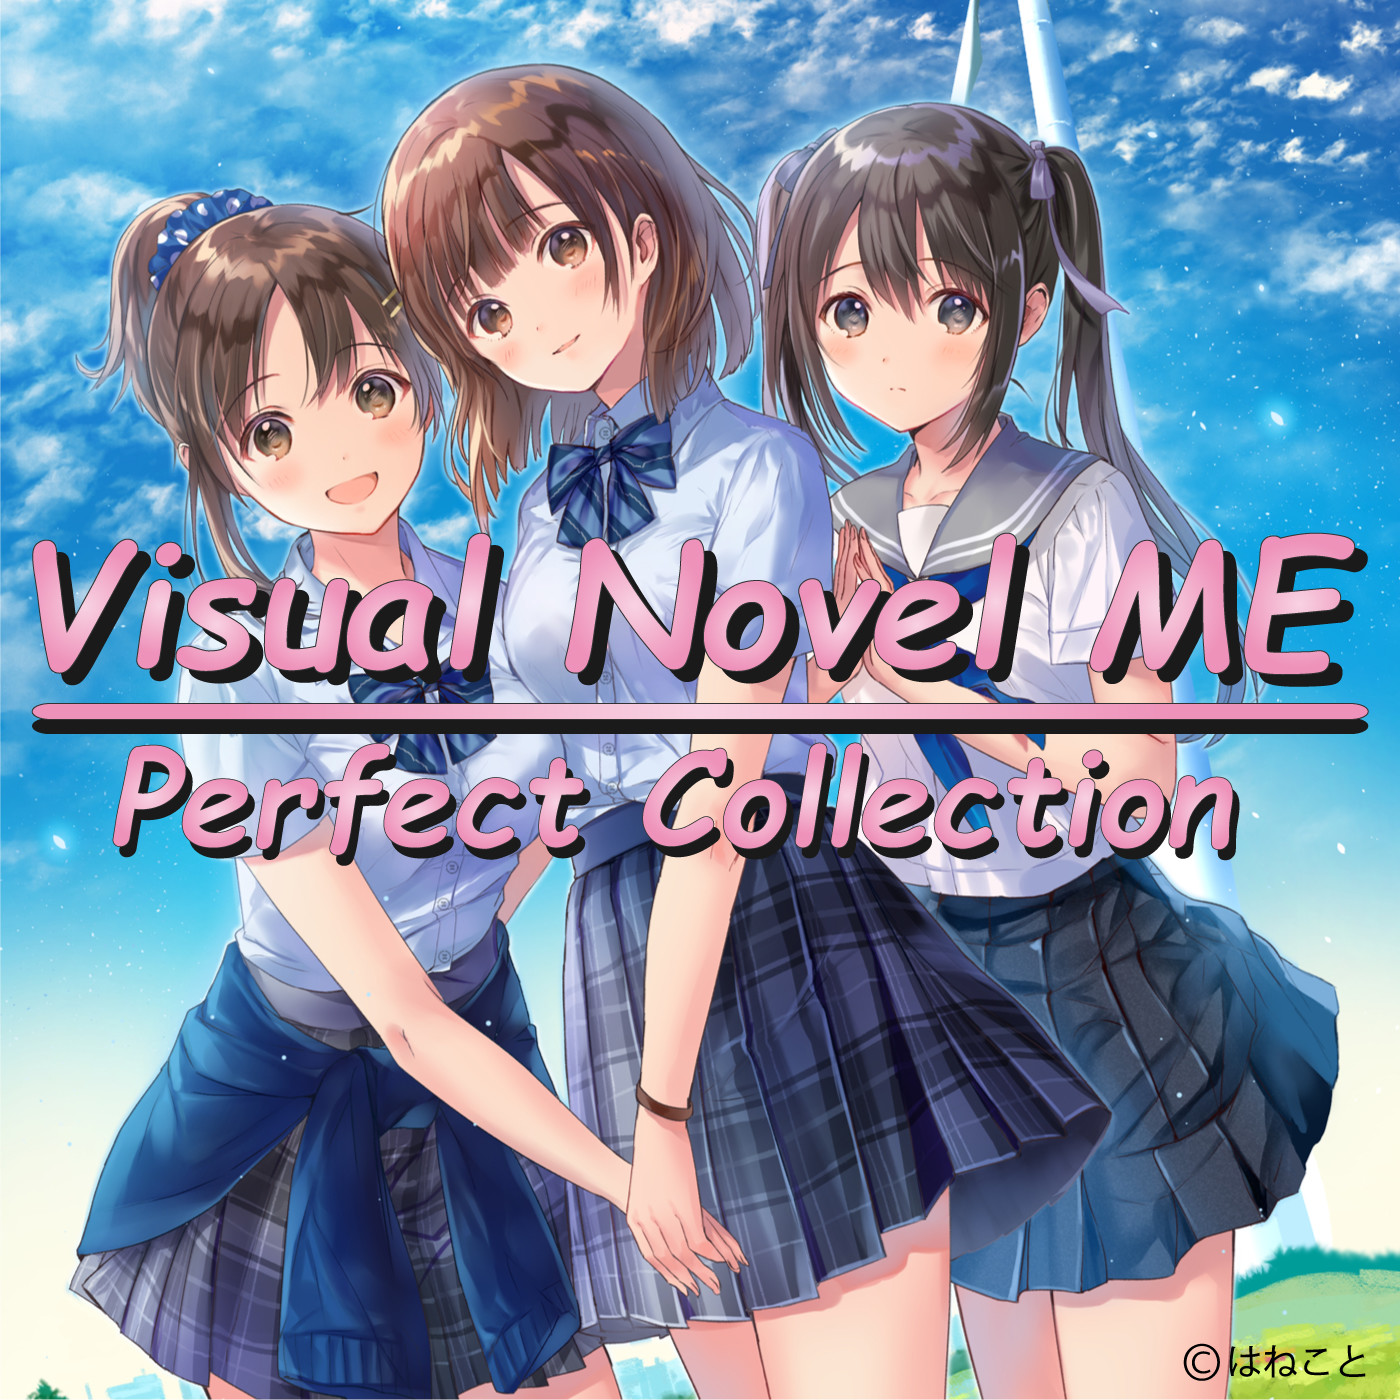 Visual Novel Maker - Visual Novel ME Perfect Collection screenshot